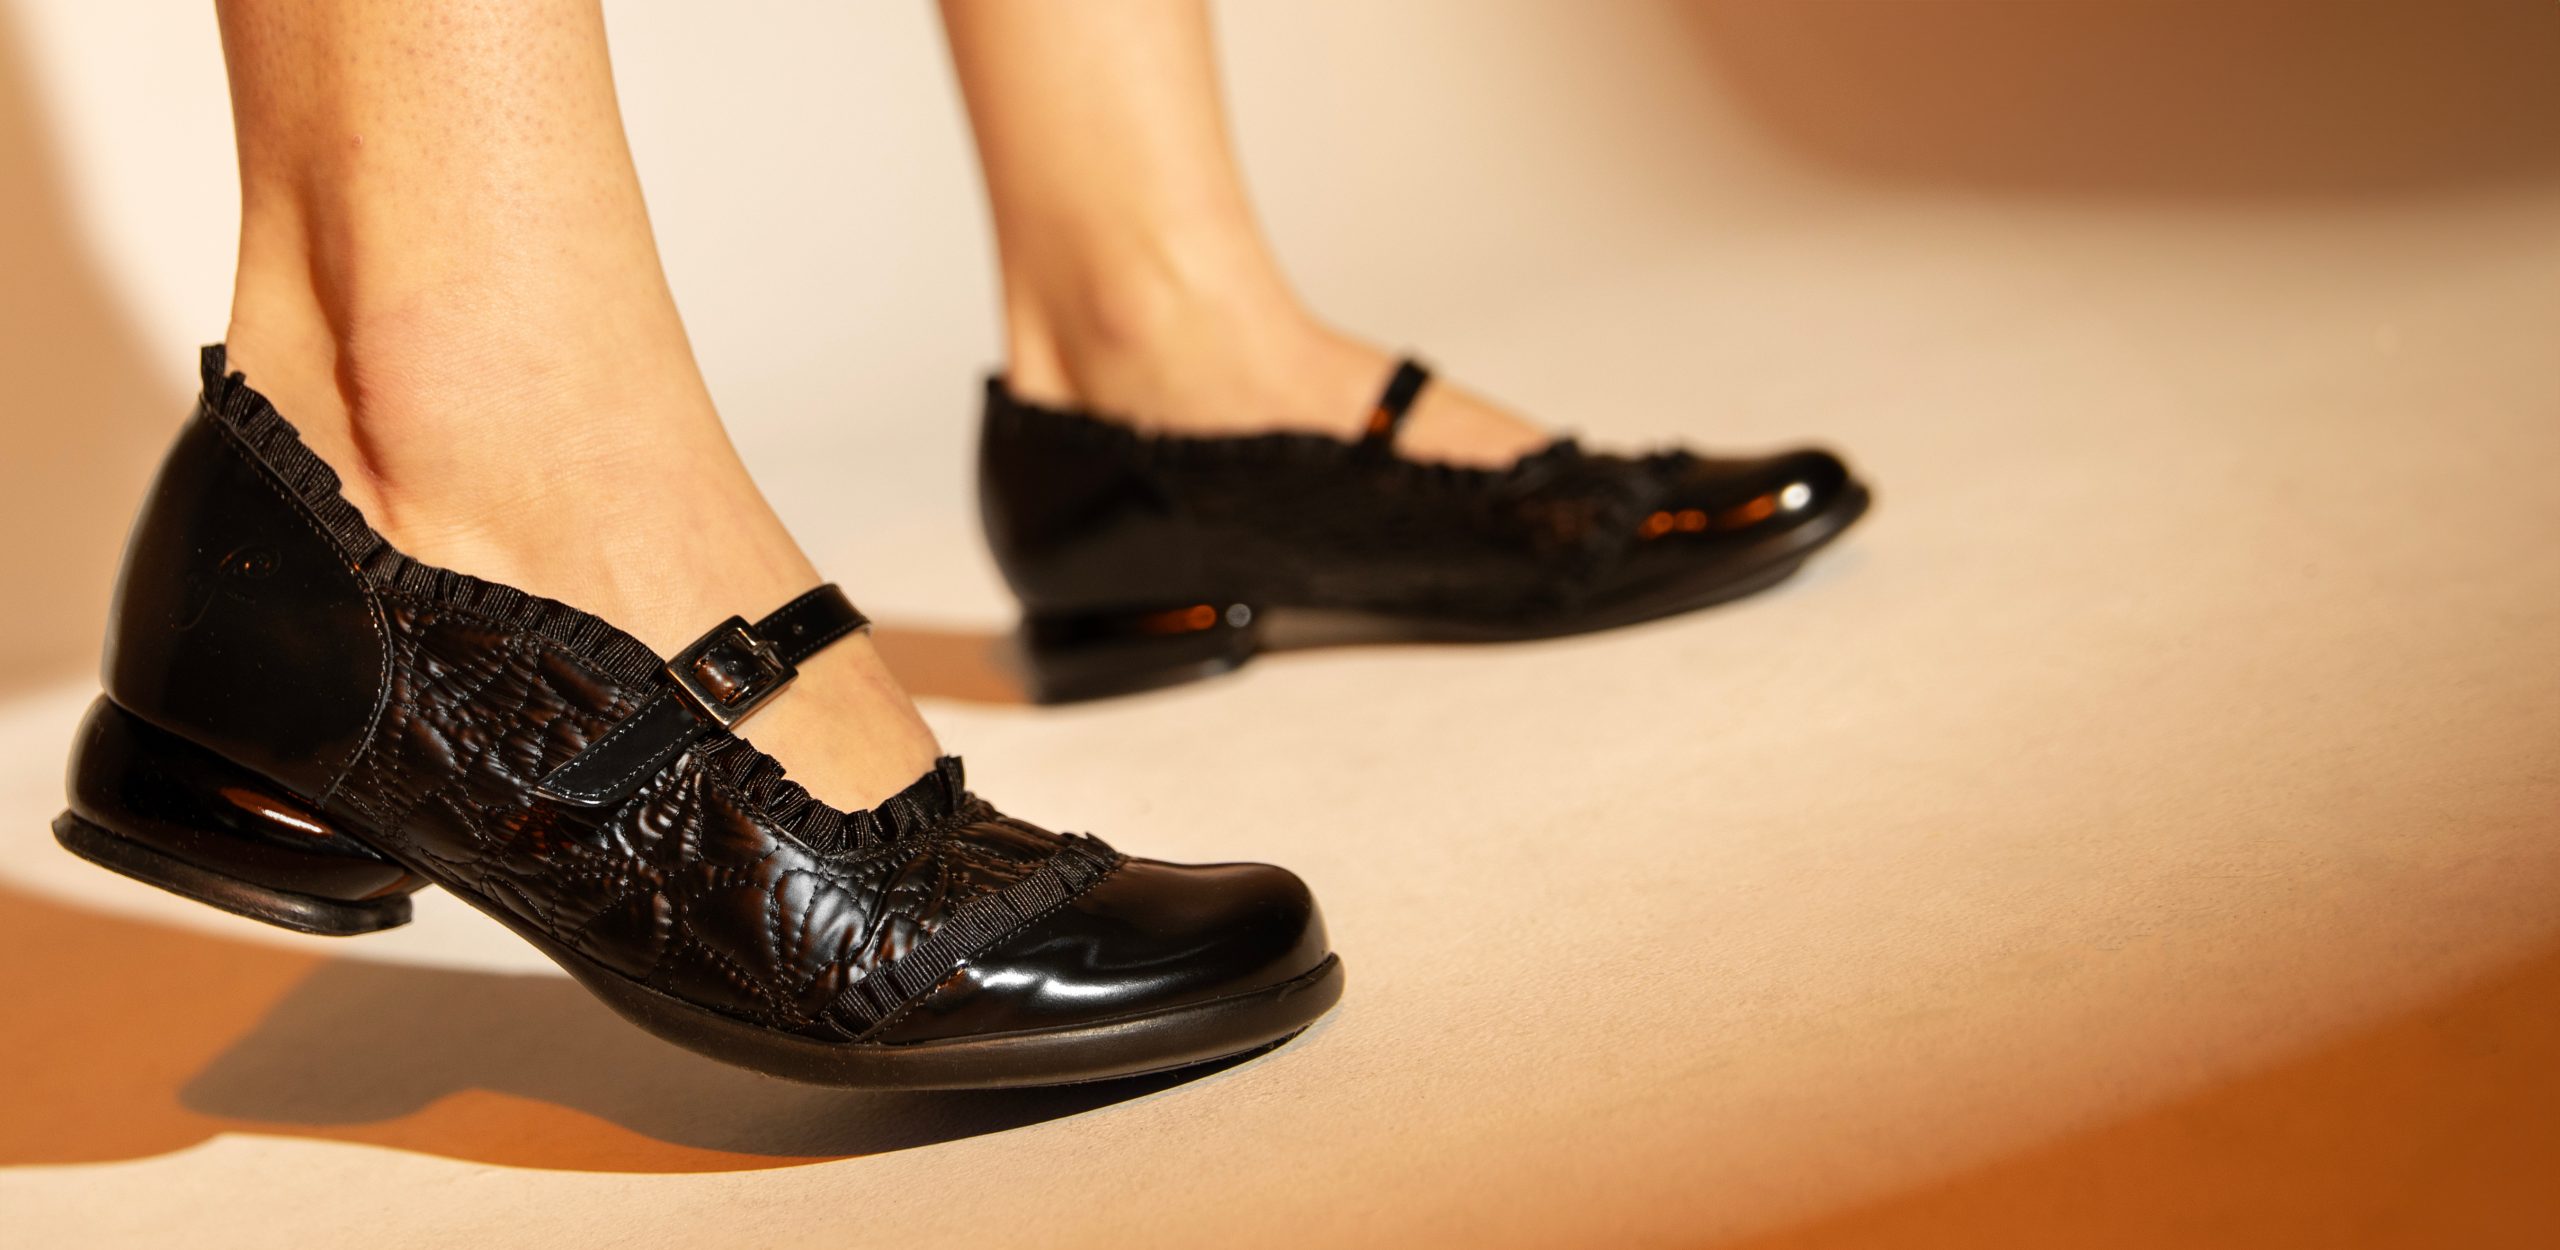 A pair of Fluevog black mary-jane shoes.